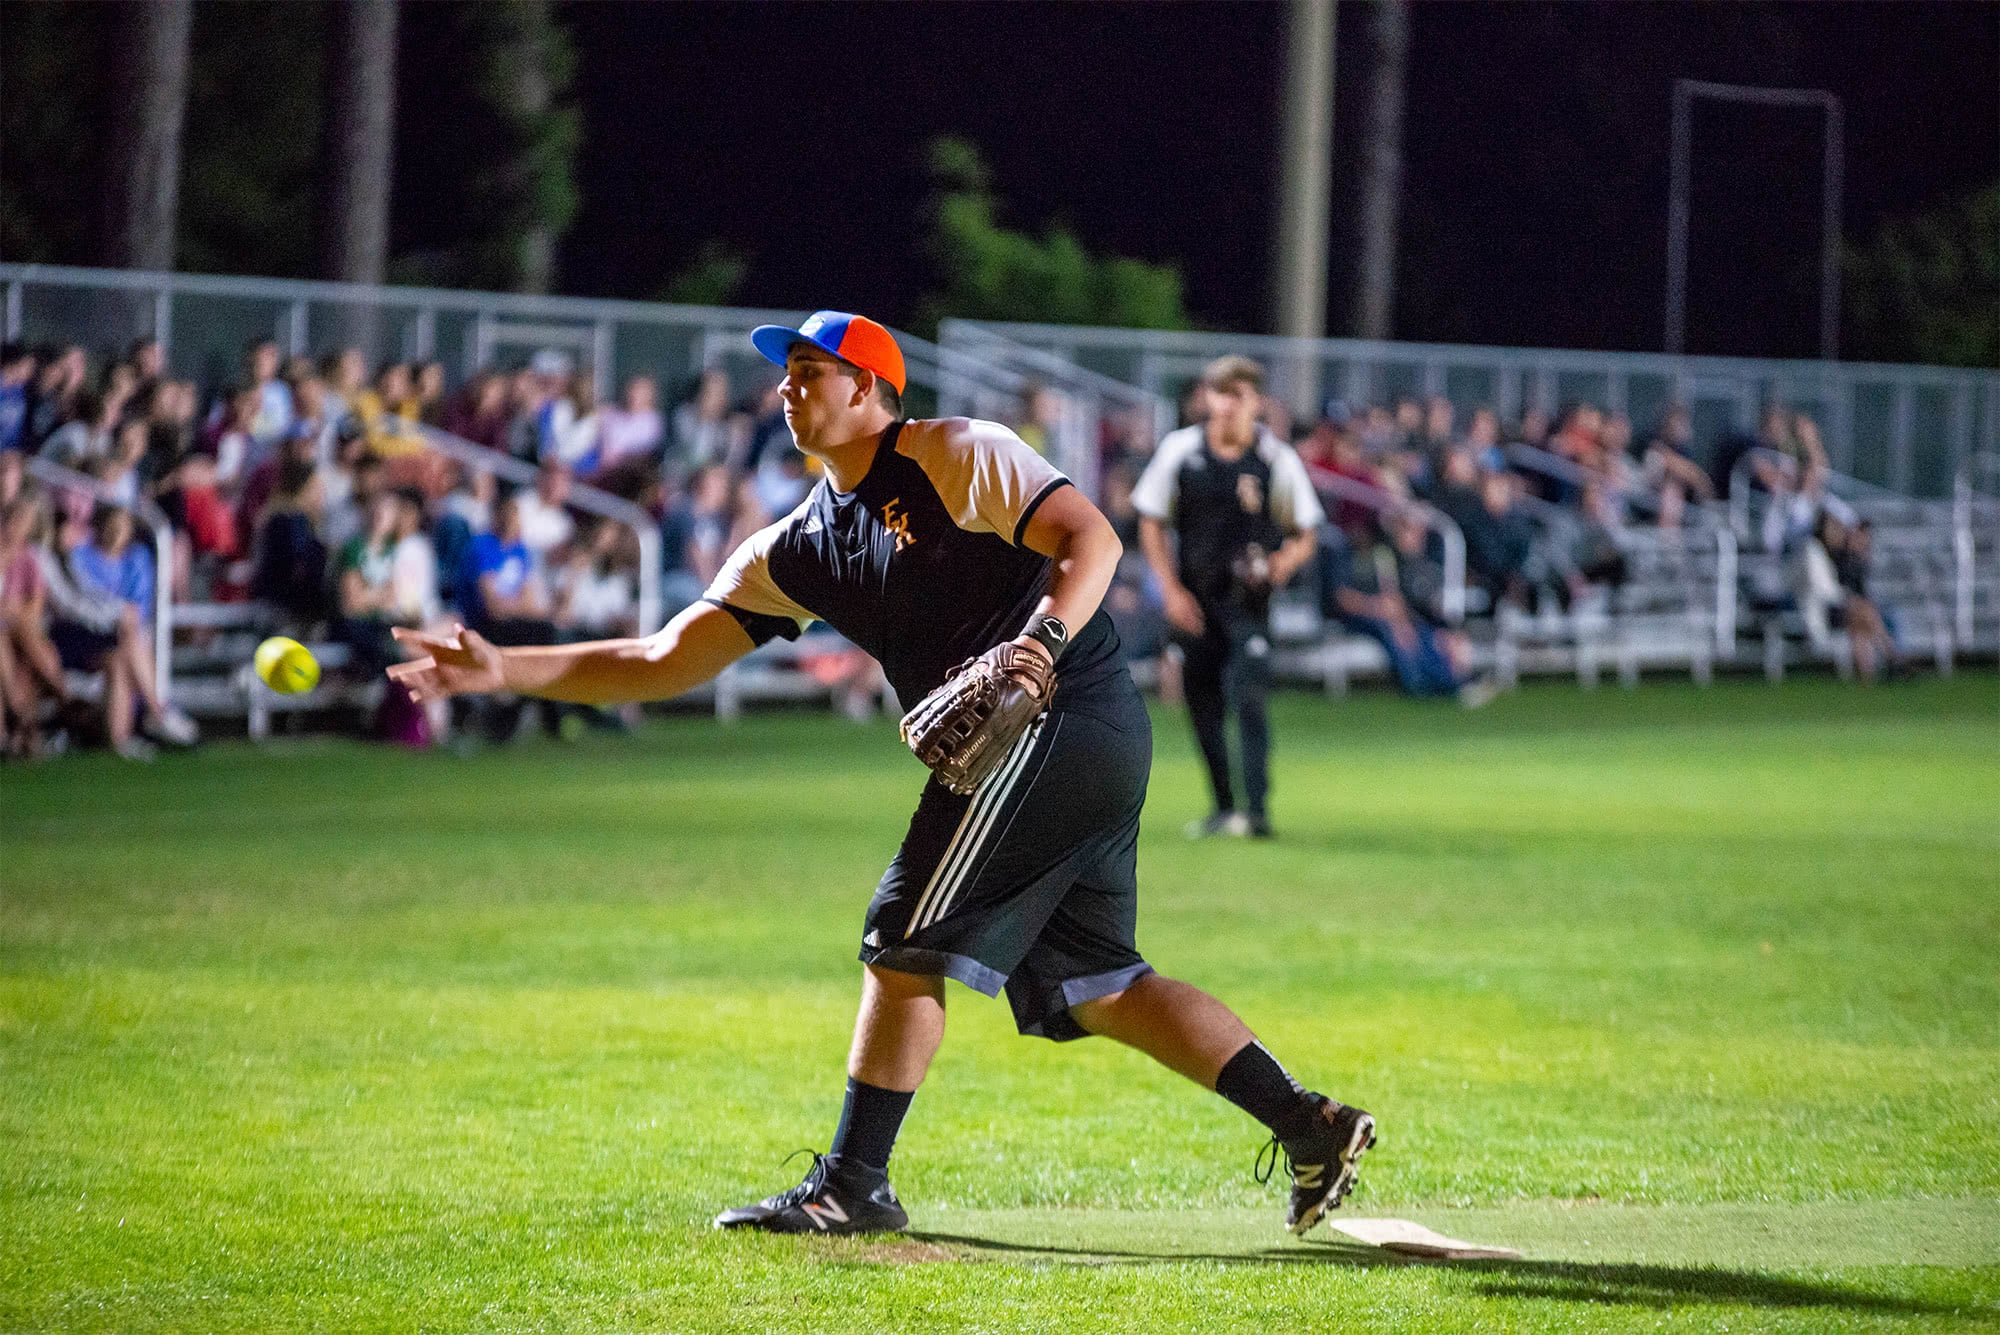 Men's collegian softball player pitching the ball. 